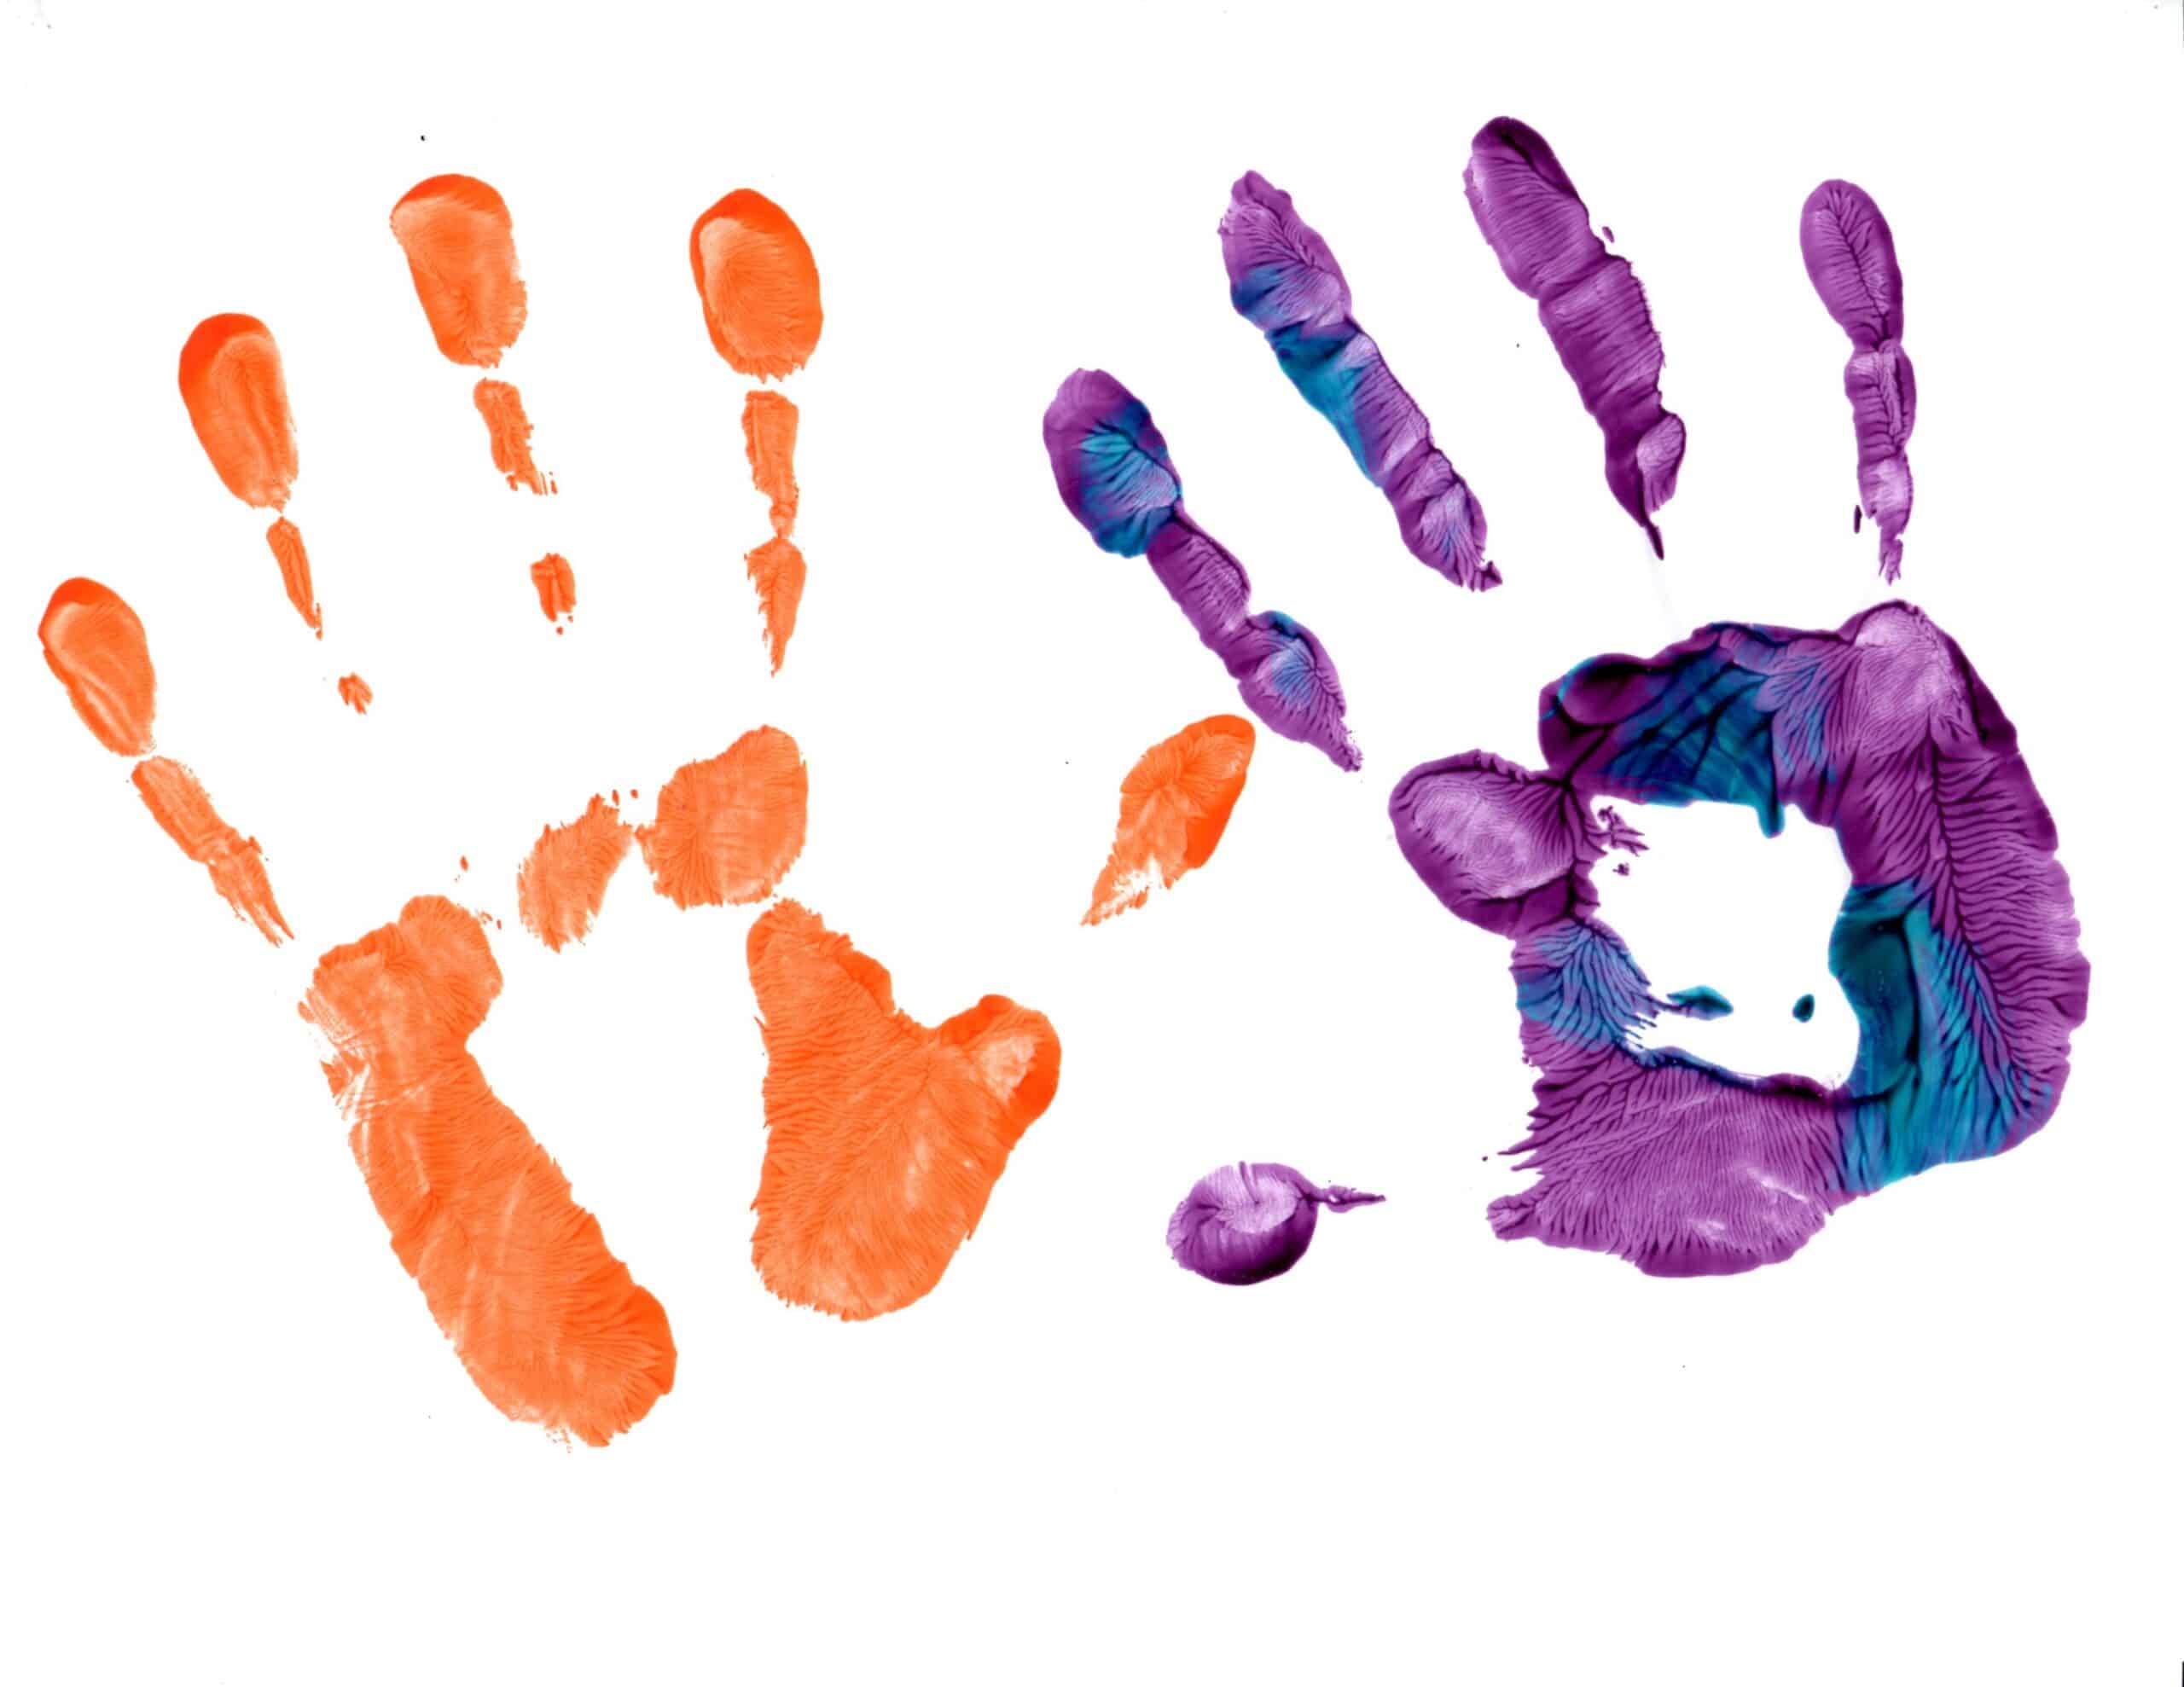 Creative Play handprints